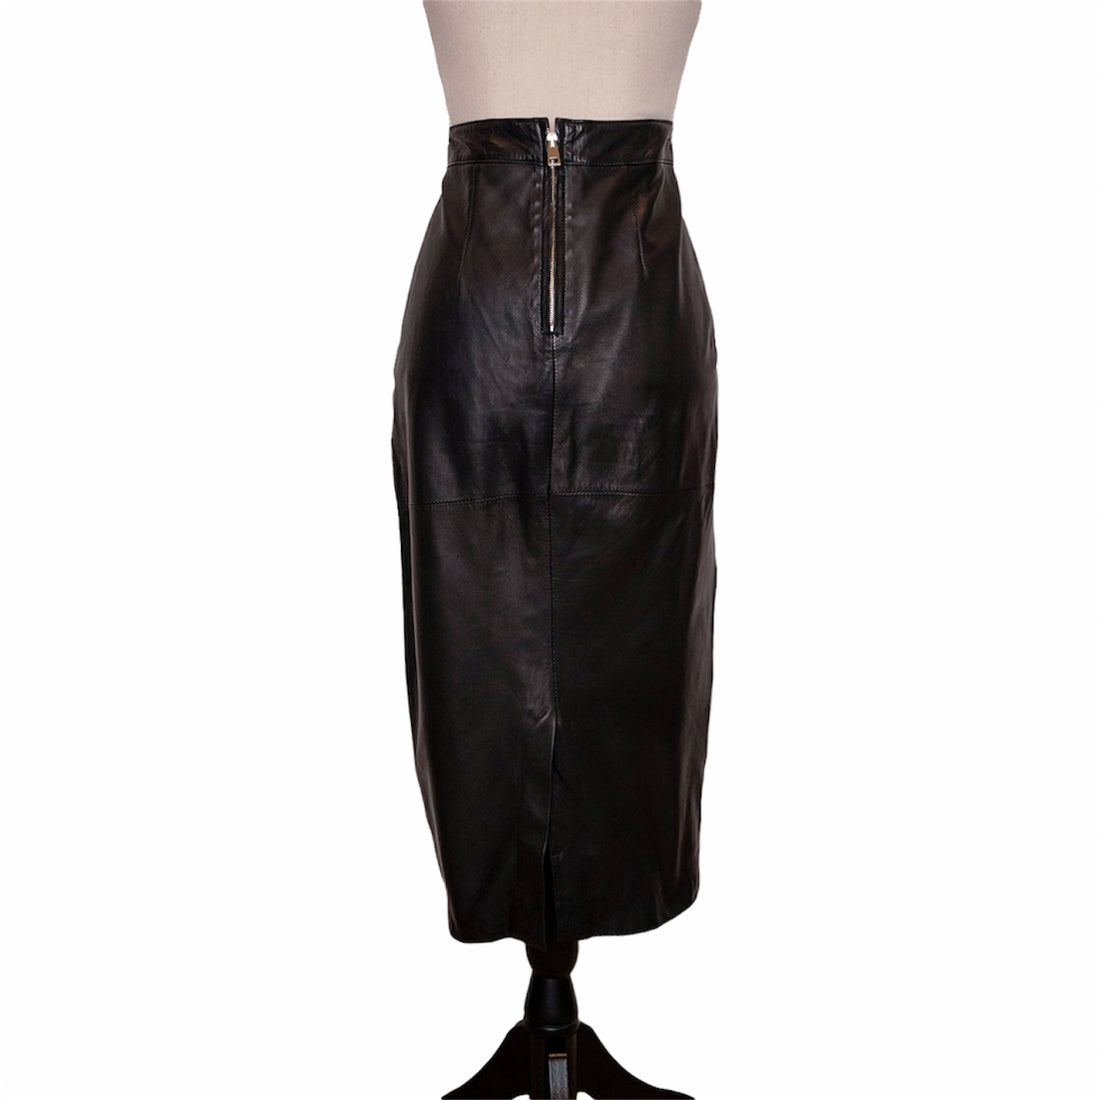 Irca leather pencil skirt